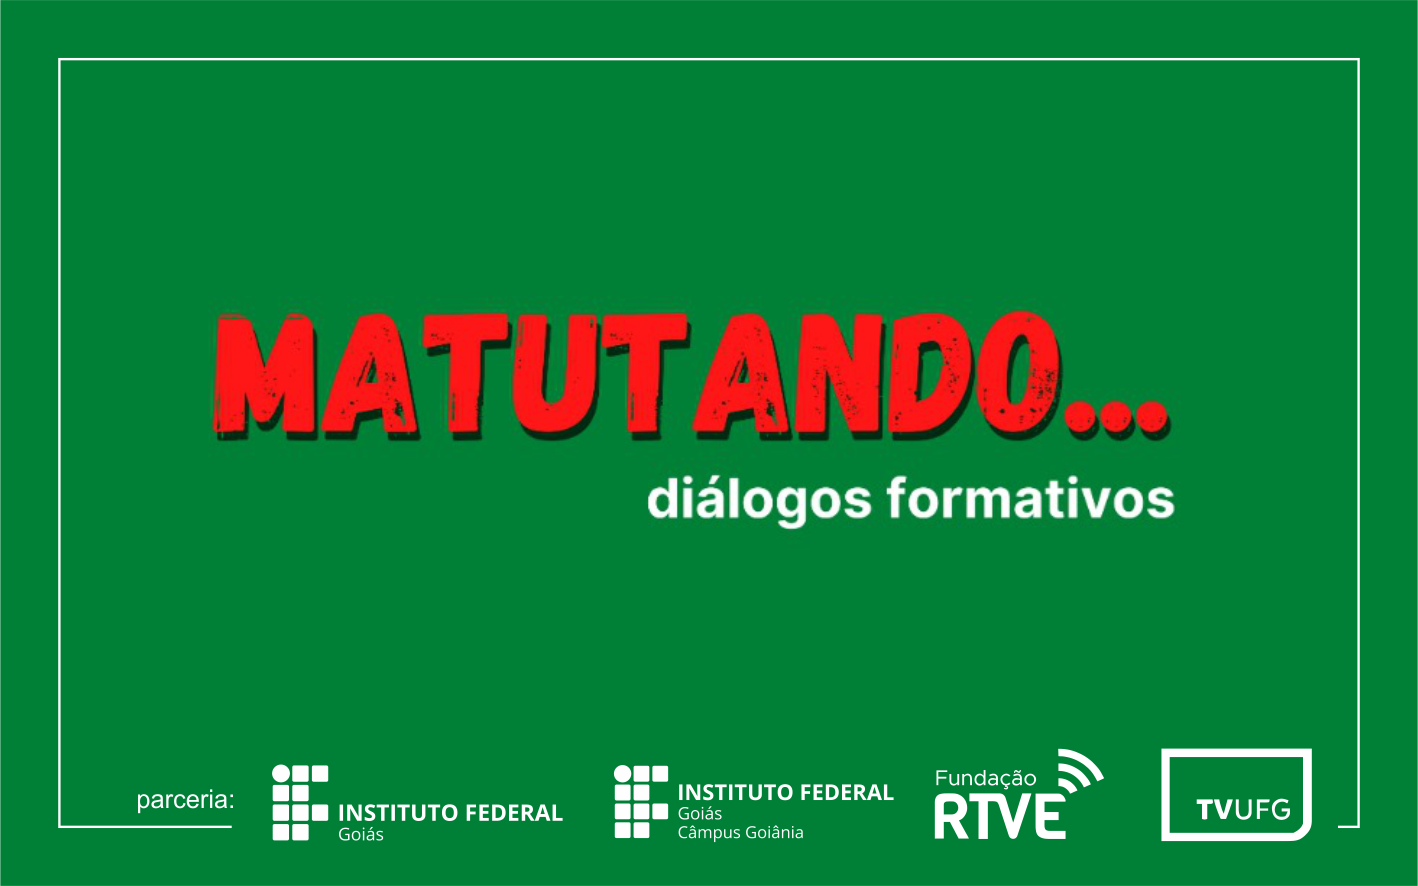 Projeto_Matutando_Dilogos_Formativos_TVUFG_IFG_materia.png - 300.47 kb